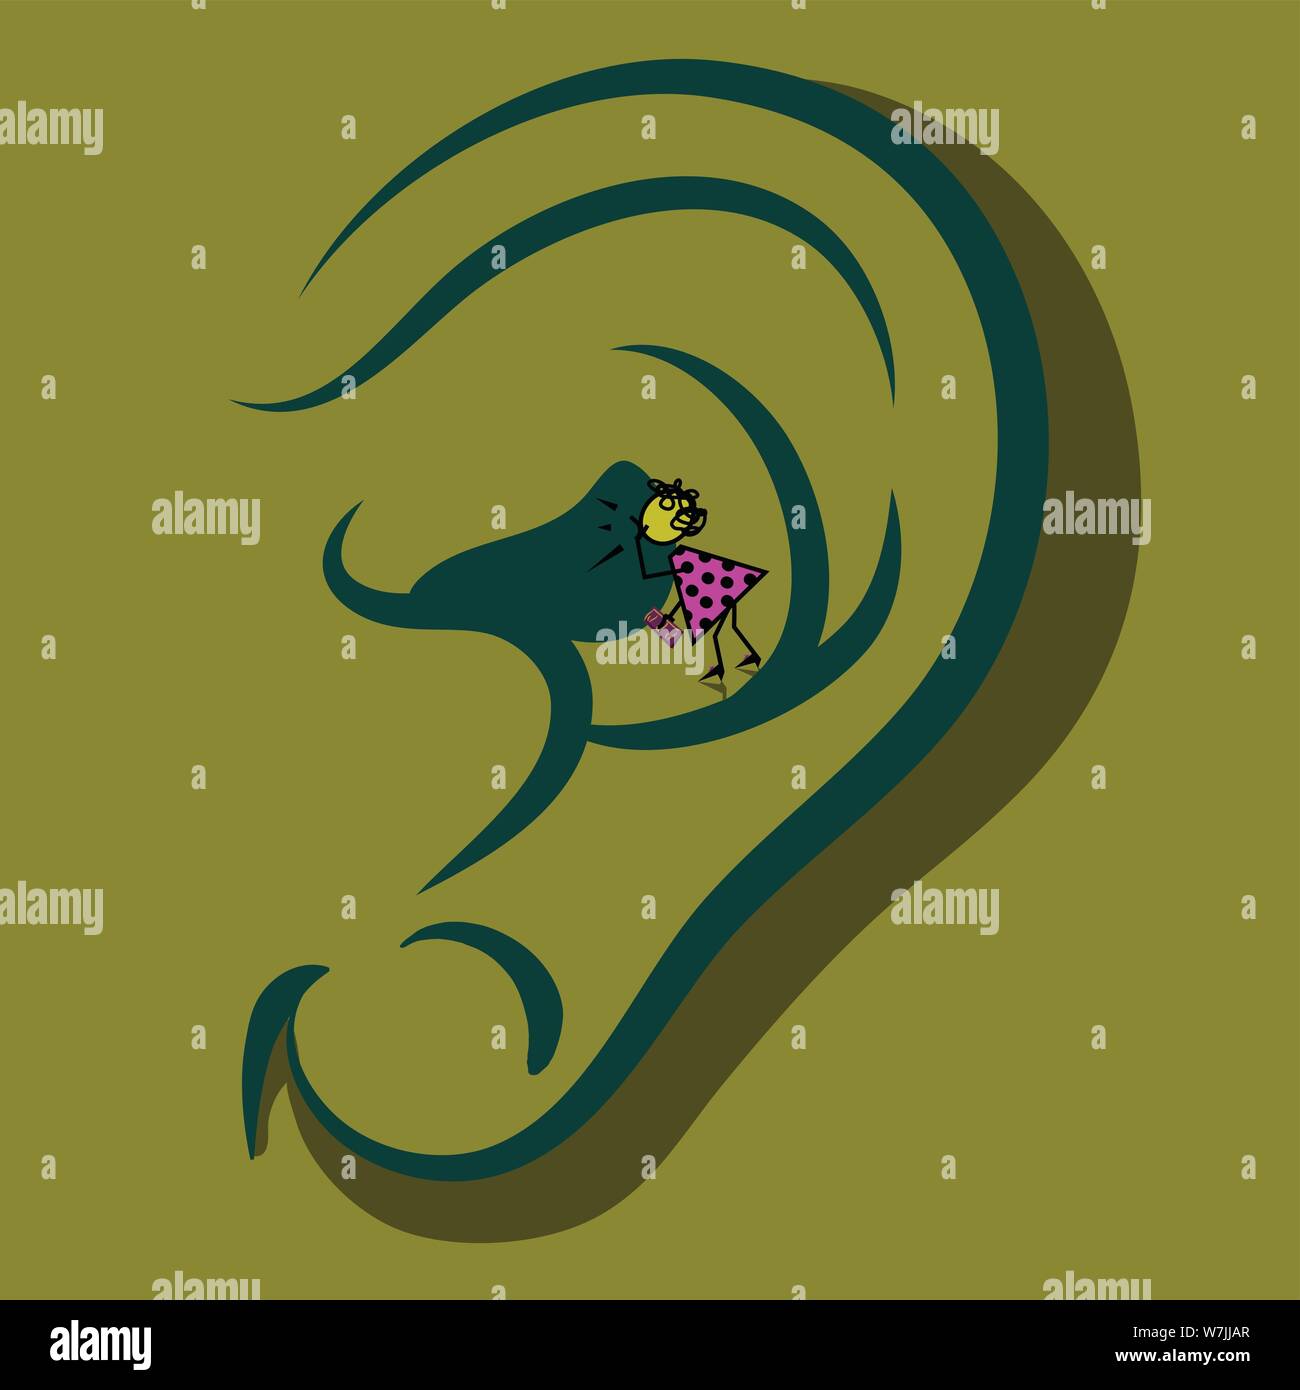 Eine winzige Stick Frau in einer Polka Dot dress screamimg in ein großes Ohr Stock Vektor